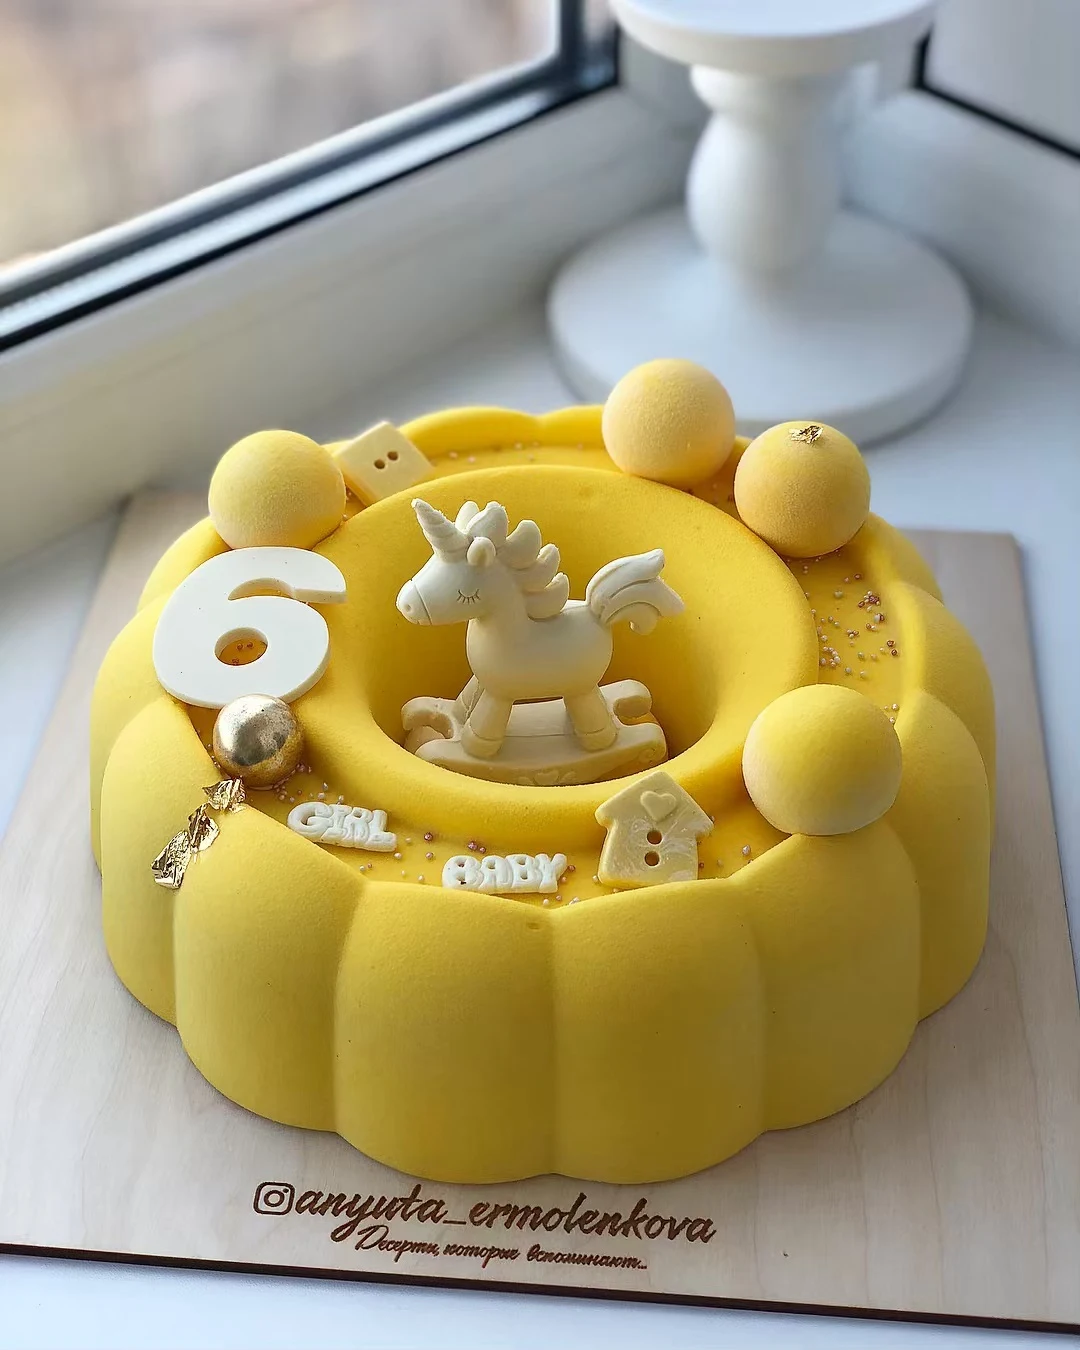 Lemon yellow cake